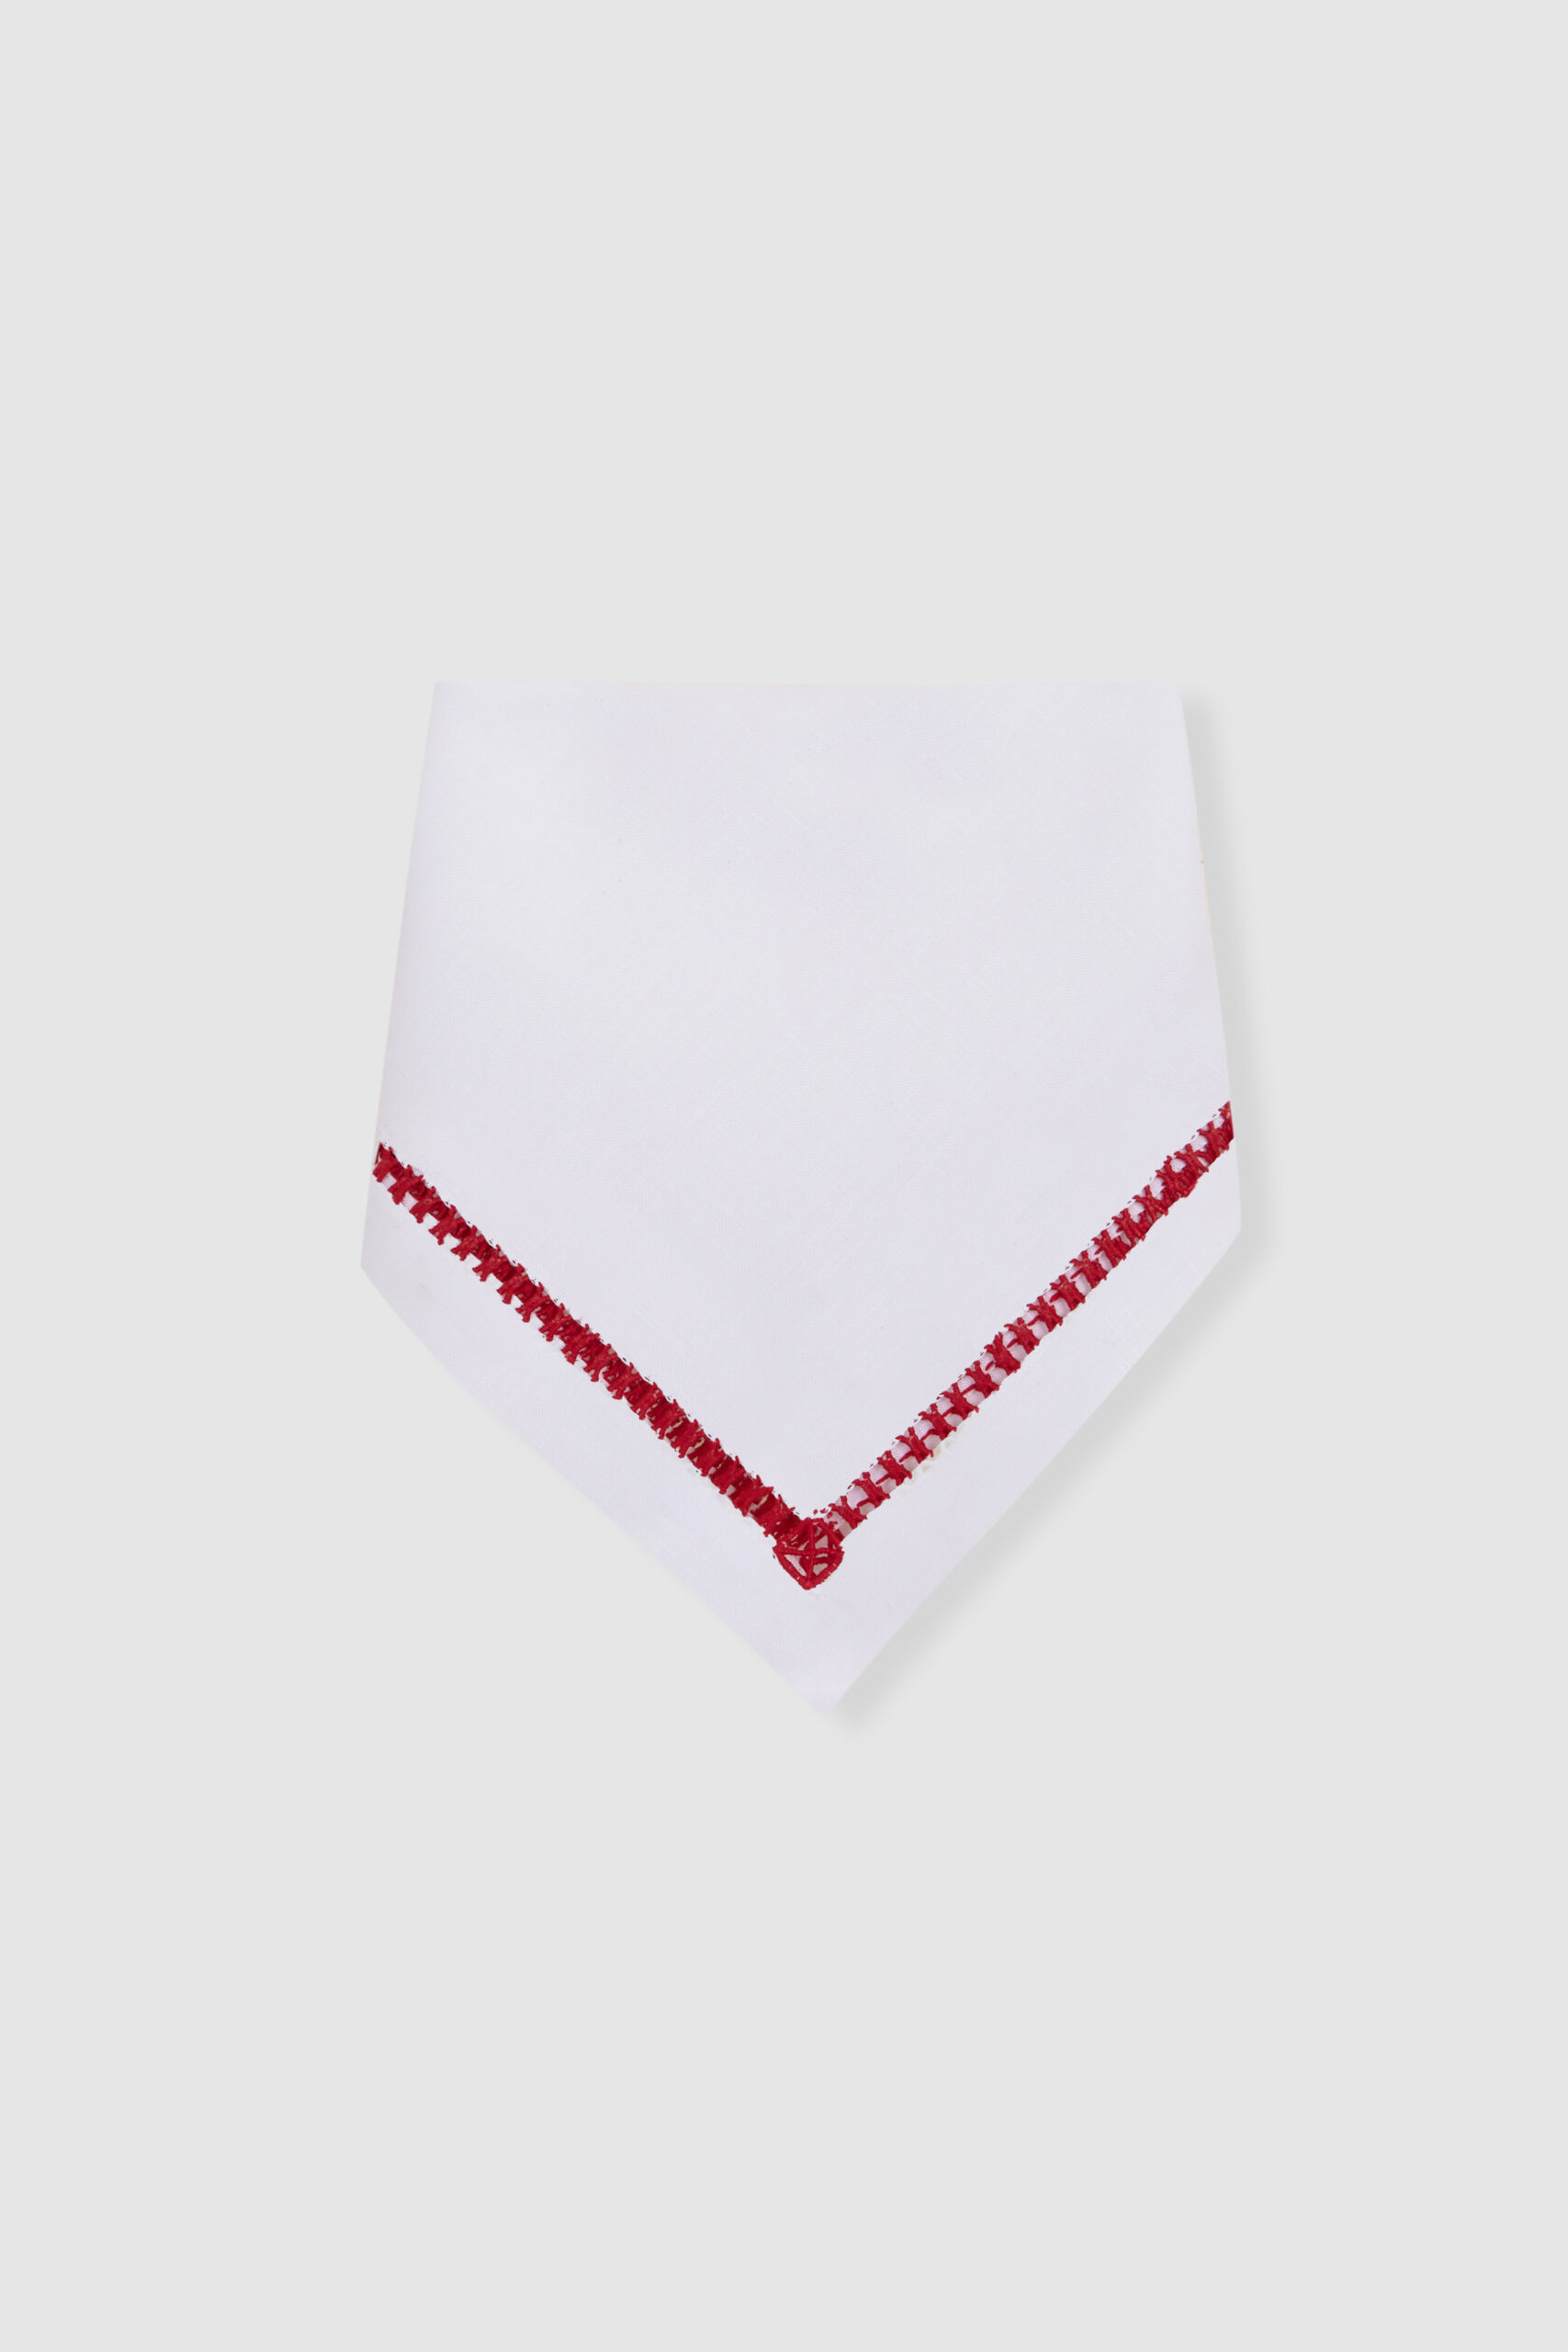 tokyo red linen napkin